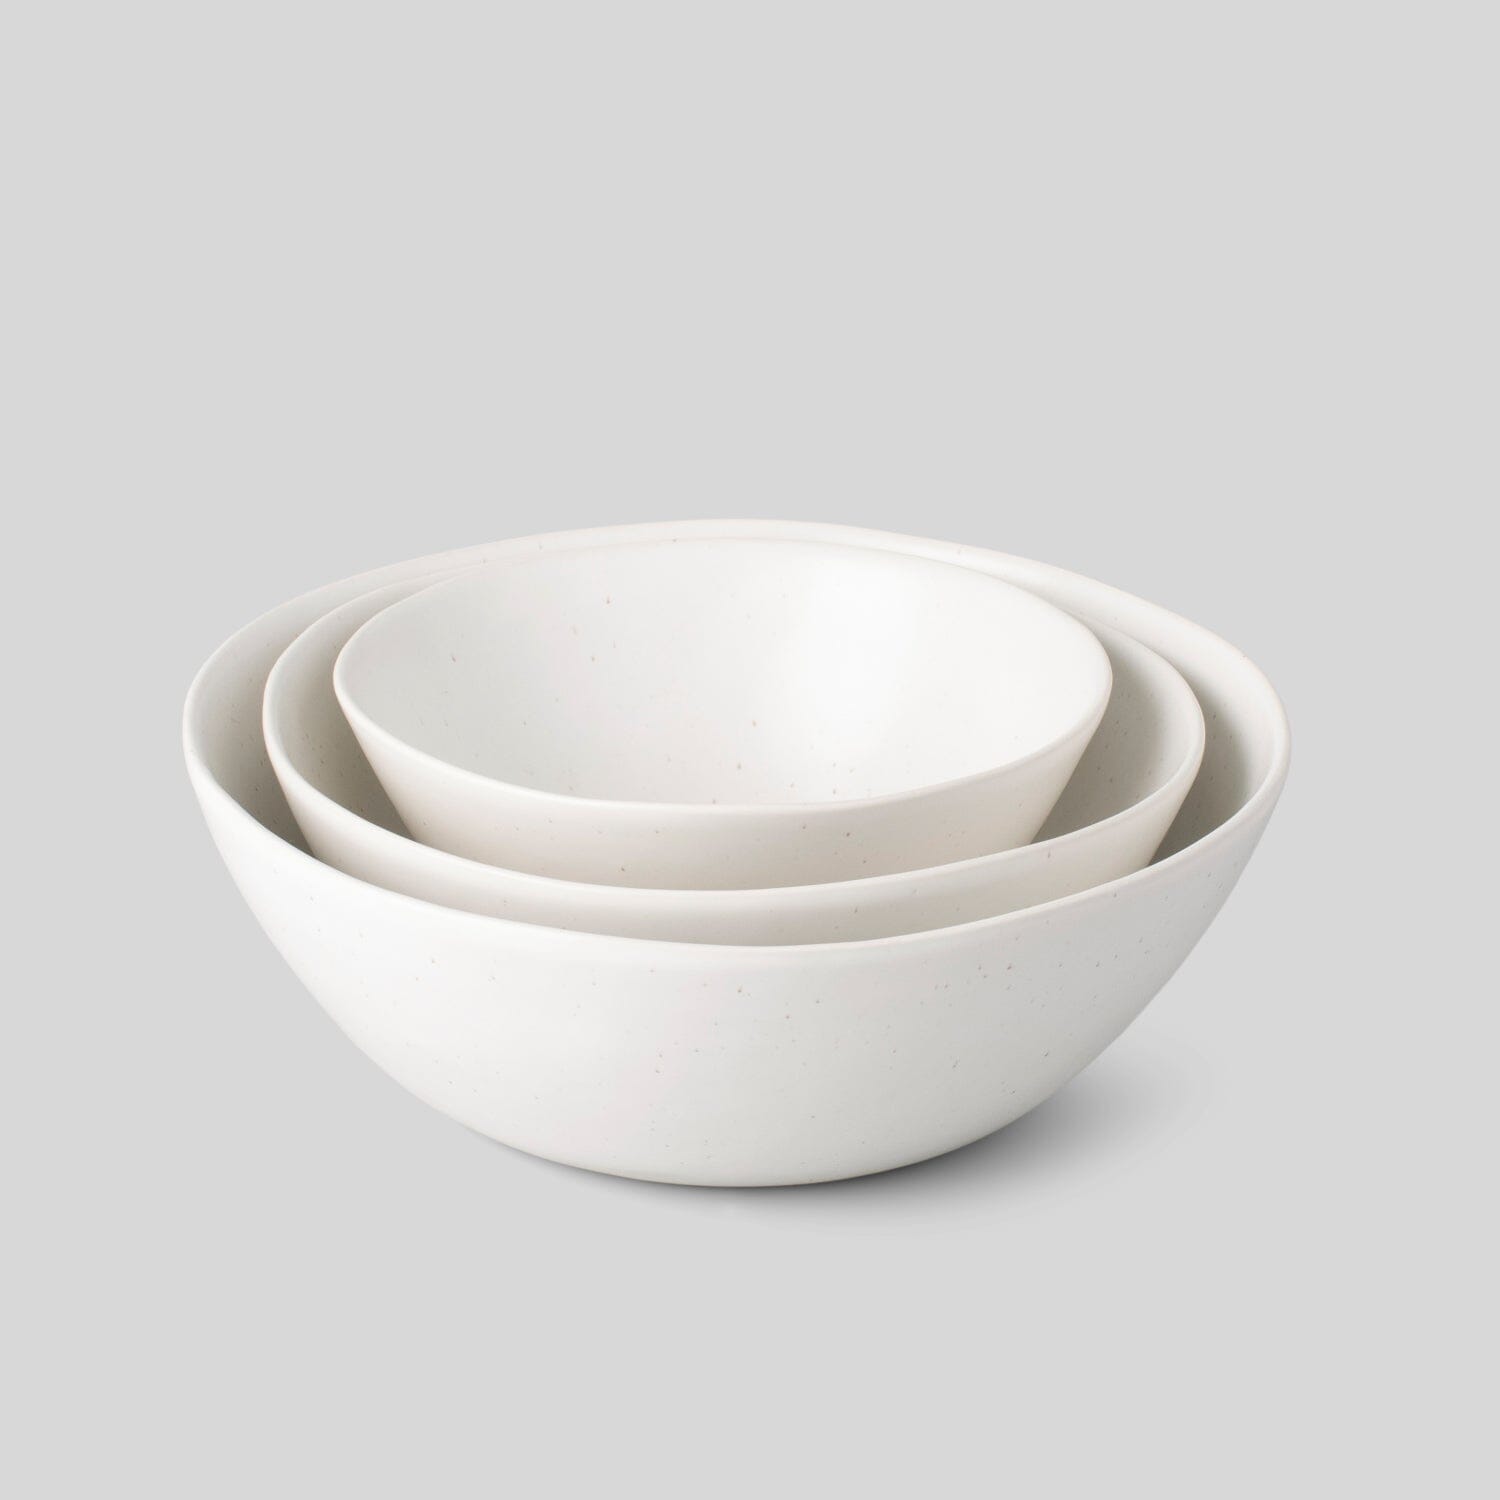 Better Homes & Gardens Oval Porcelain Serve Bowls, White, Set of 4 